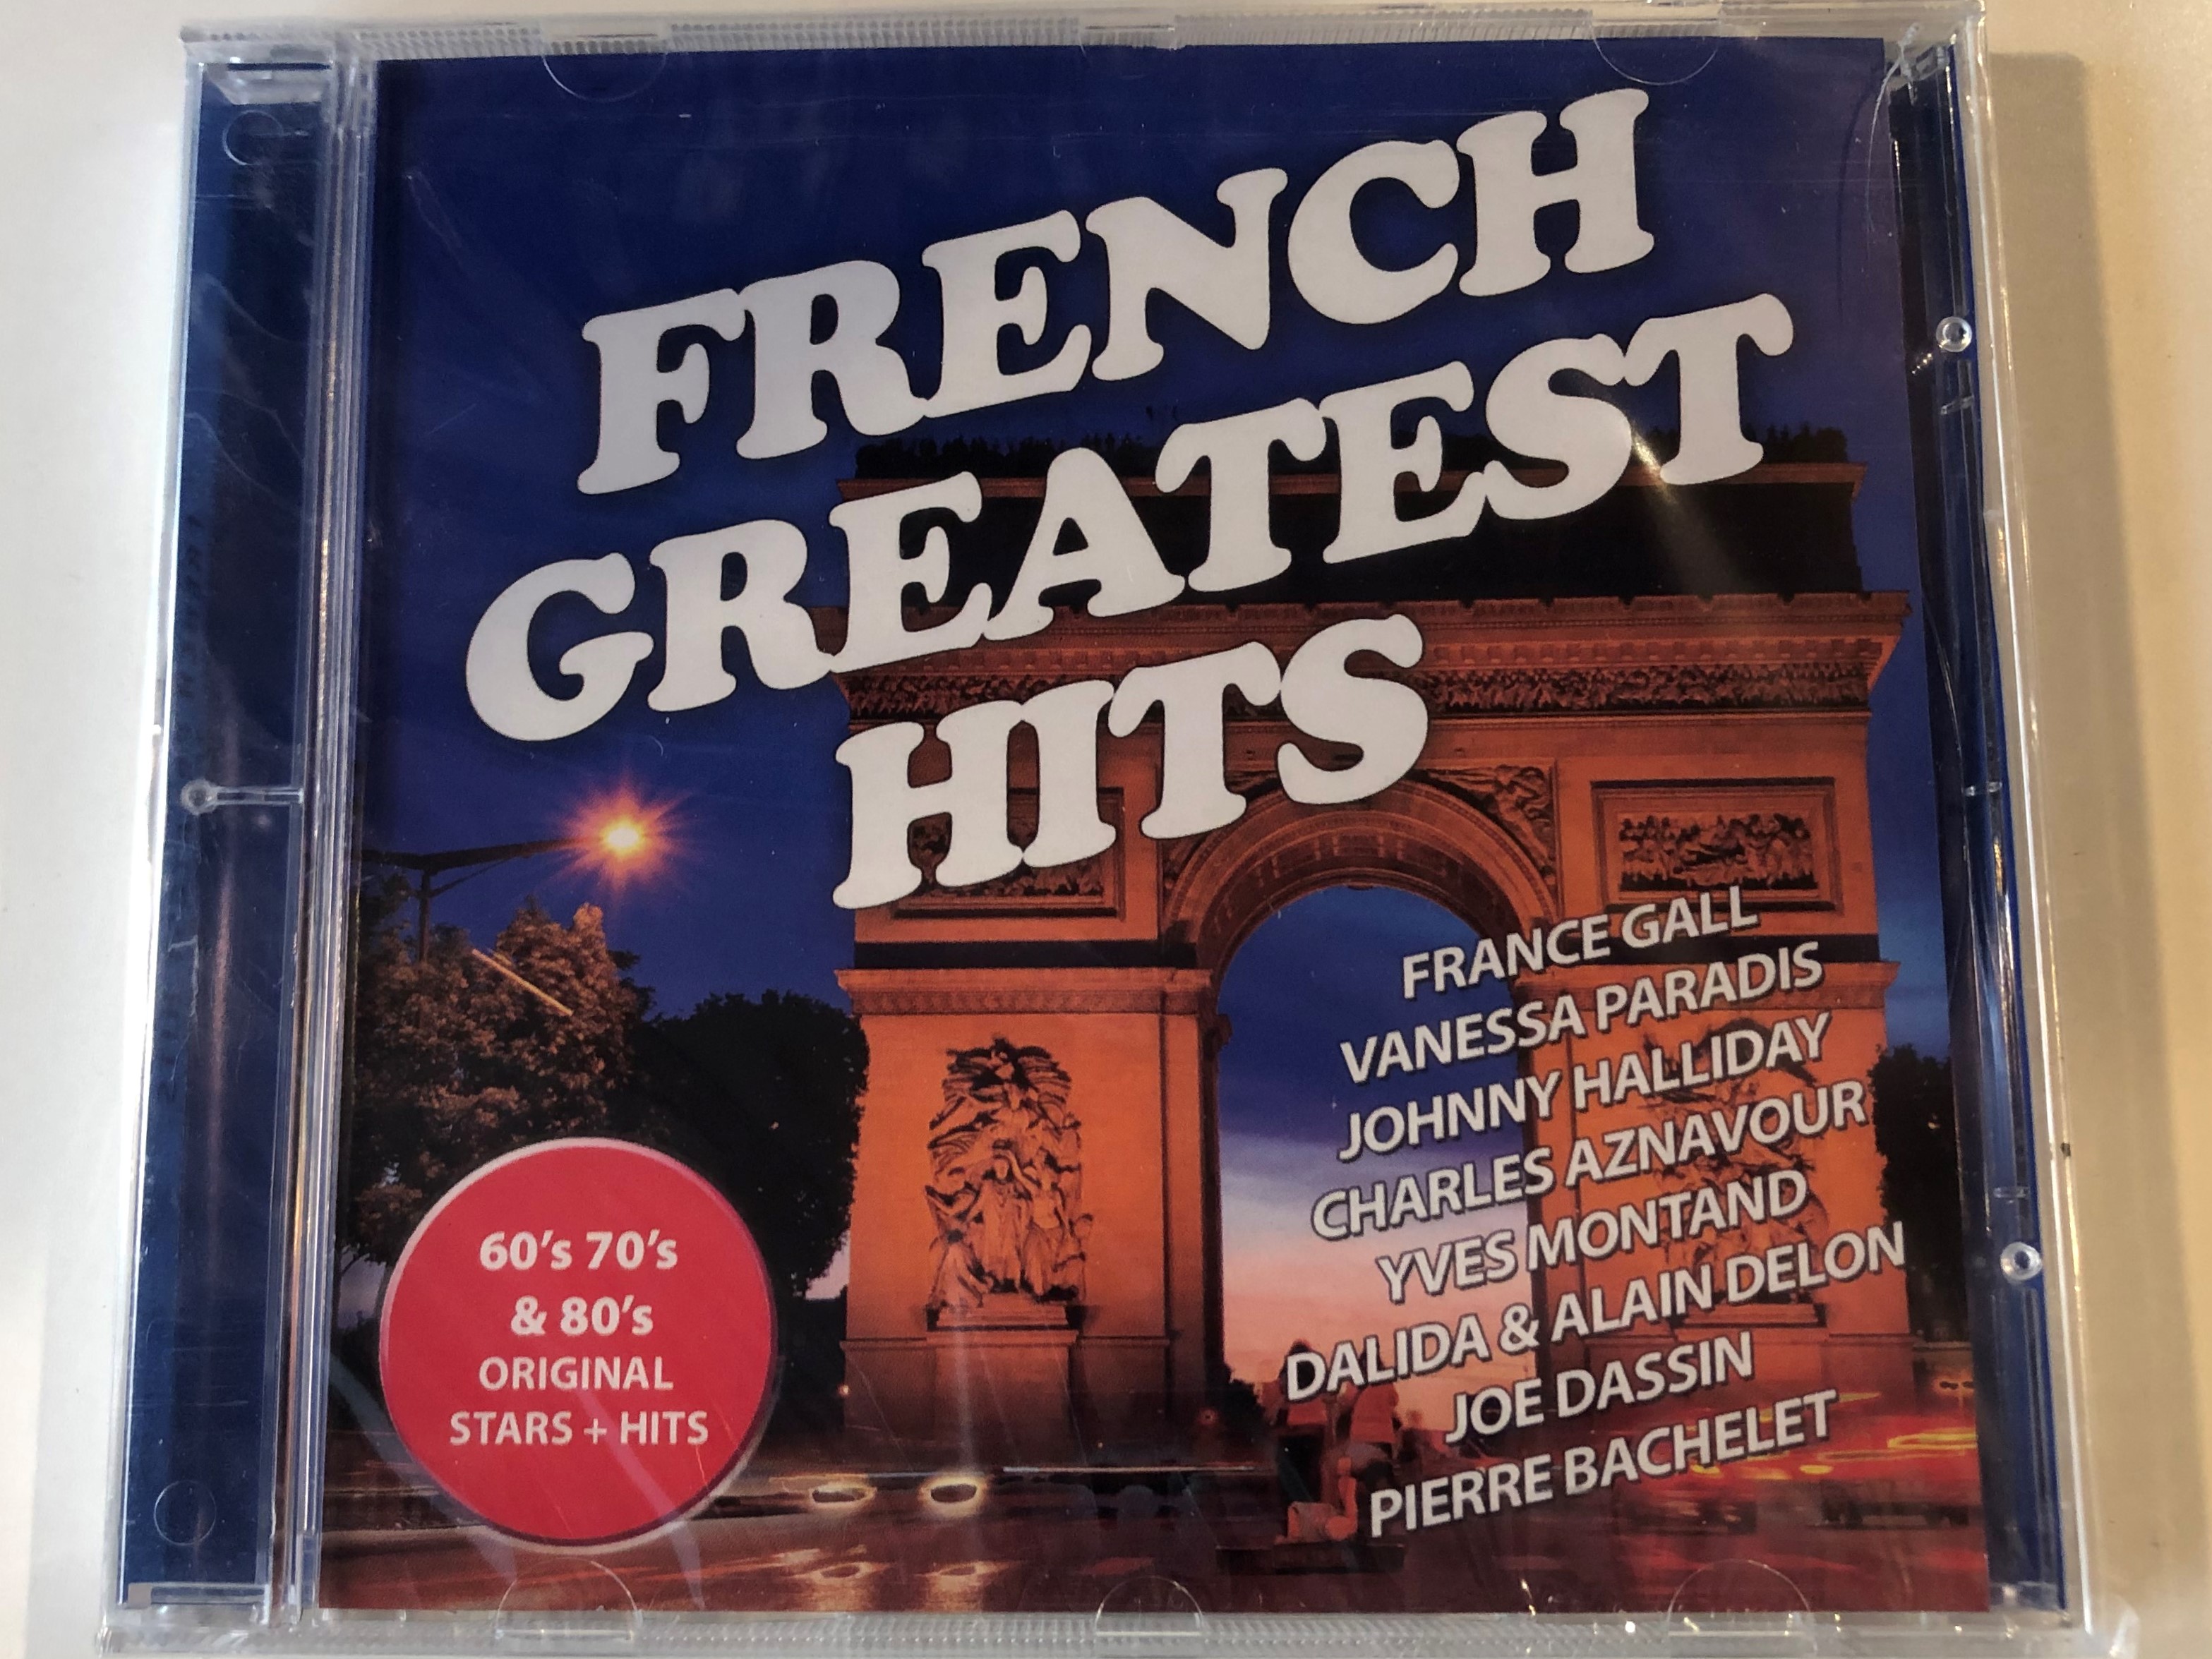 french-greatest-hits-france-gall-vanessa-paradis-johnny-hallyday-charles-aznavour-yves-montand-dalida-alain-delon-joe-dassin-pierre-bachelet-frontline-productions-records-audio-cd-1-.jpg